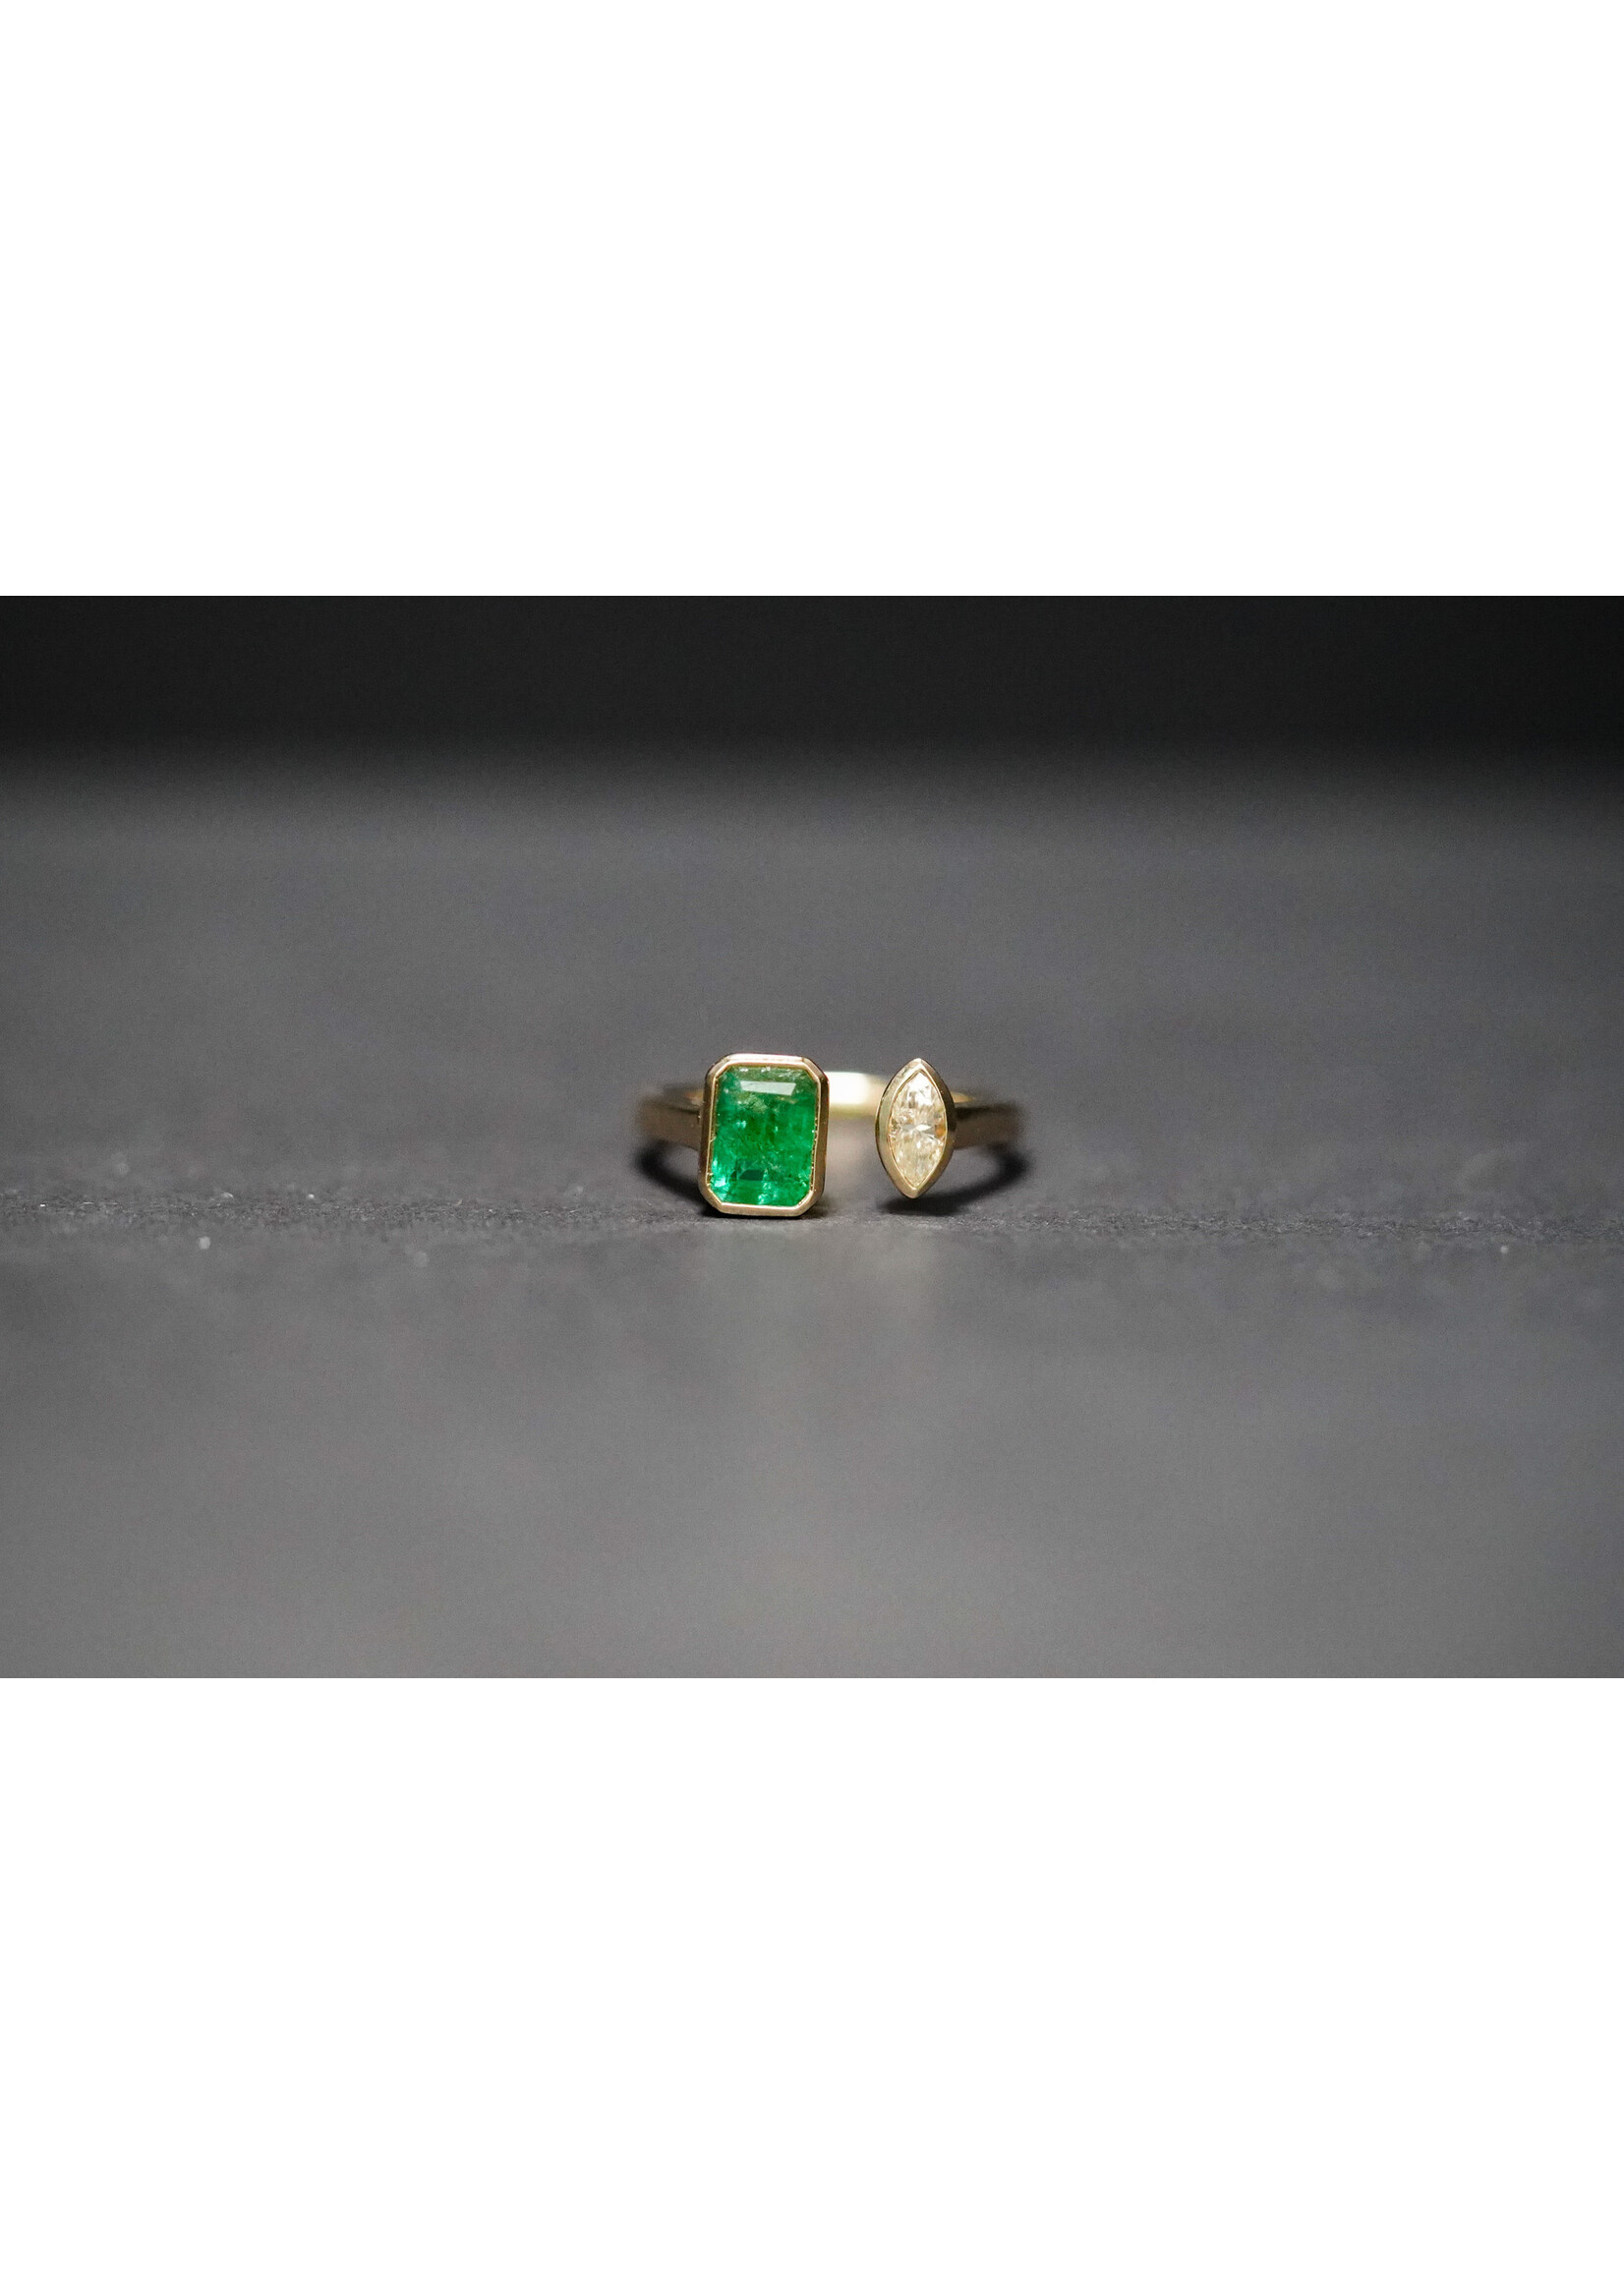 LVEX- 14KY 2.9g 1.58ctw (1.35ctr) Emerald & Diamond Open Ring (size 5.5)